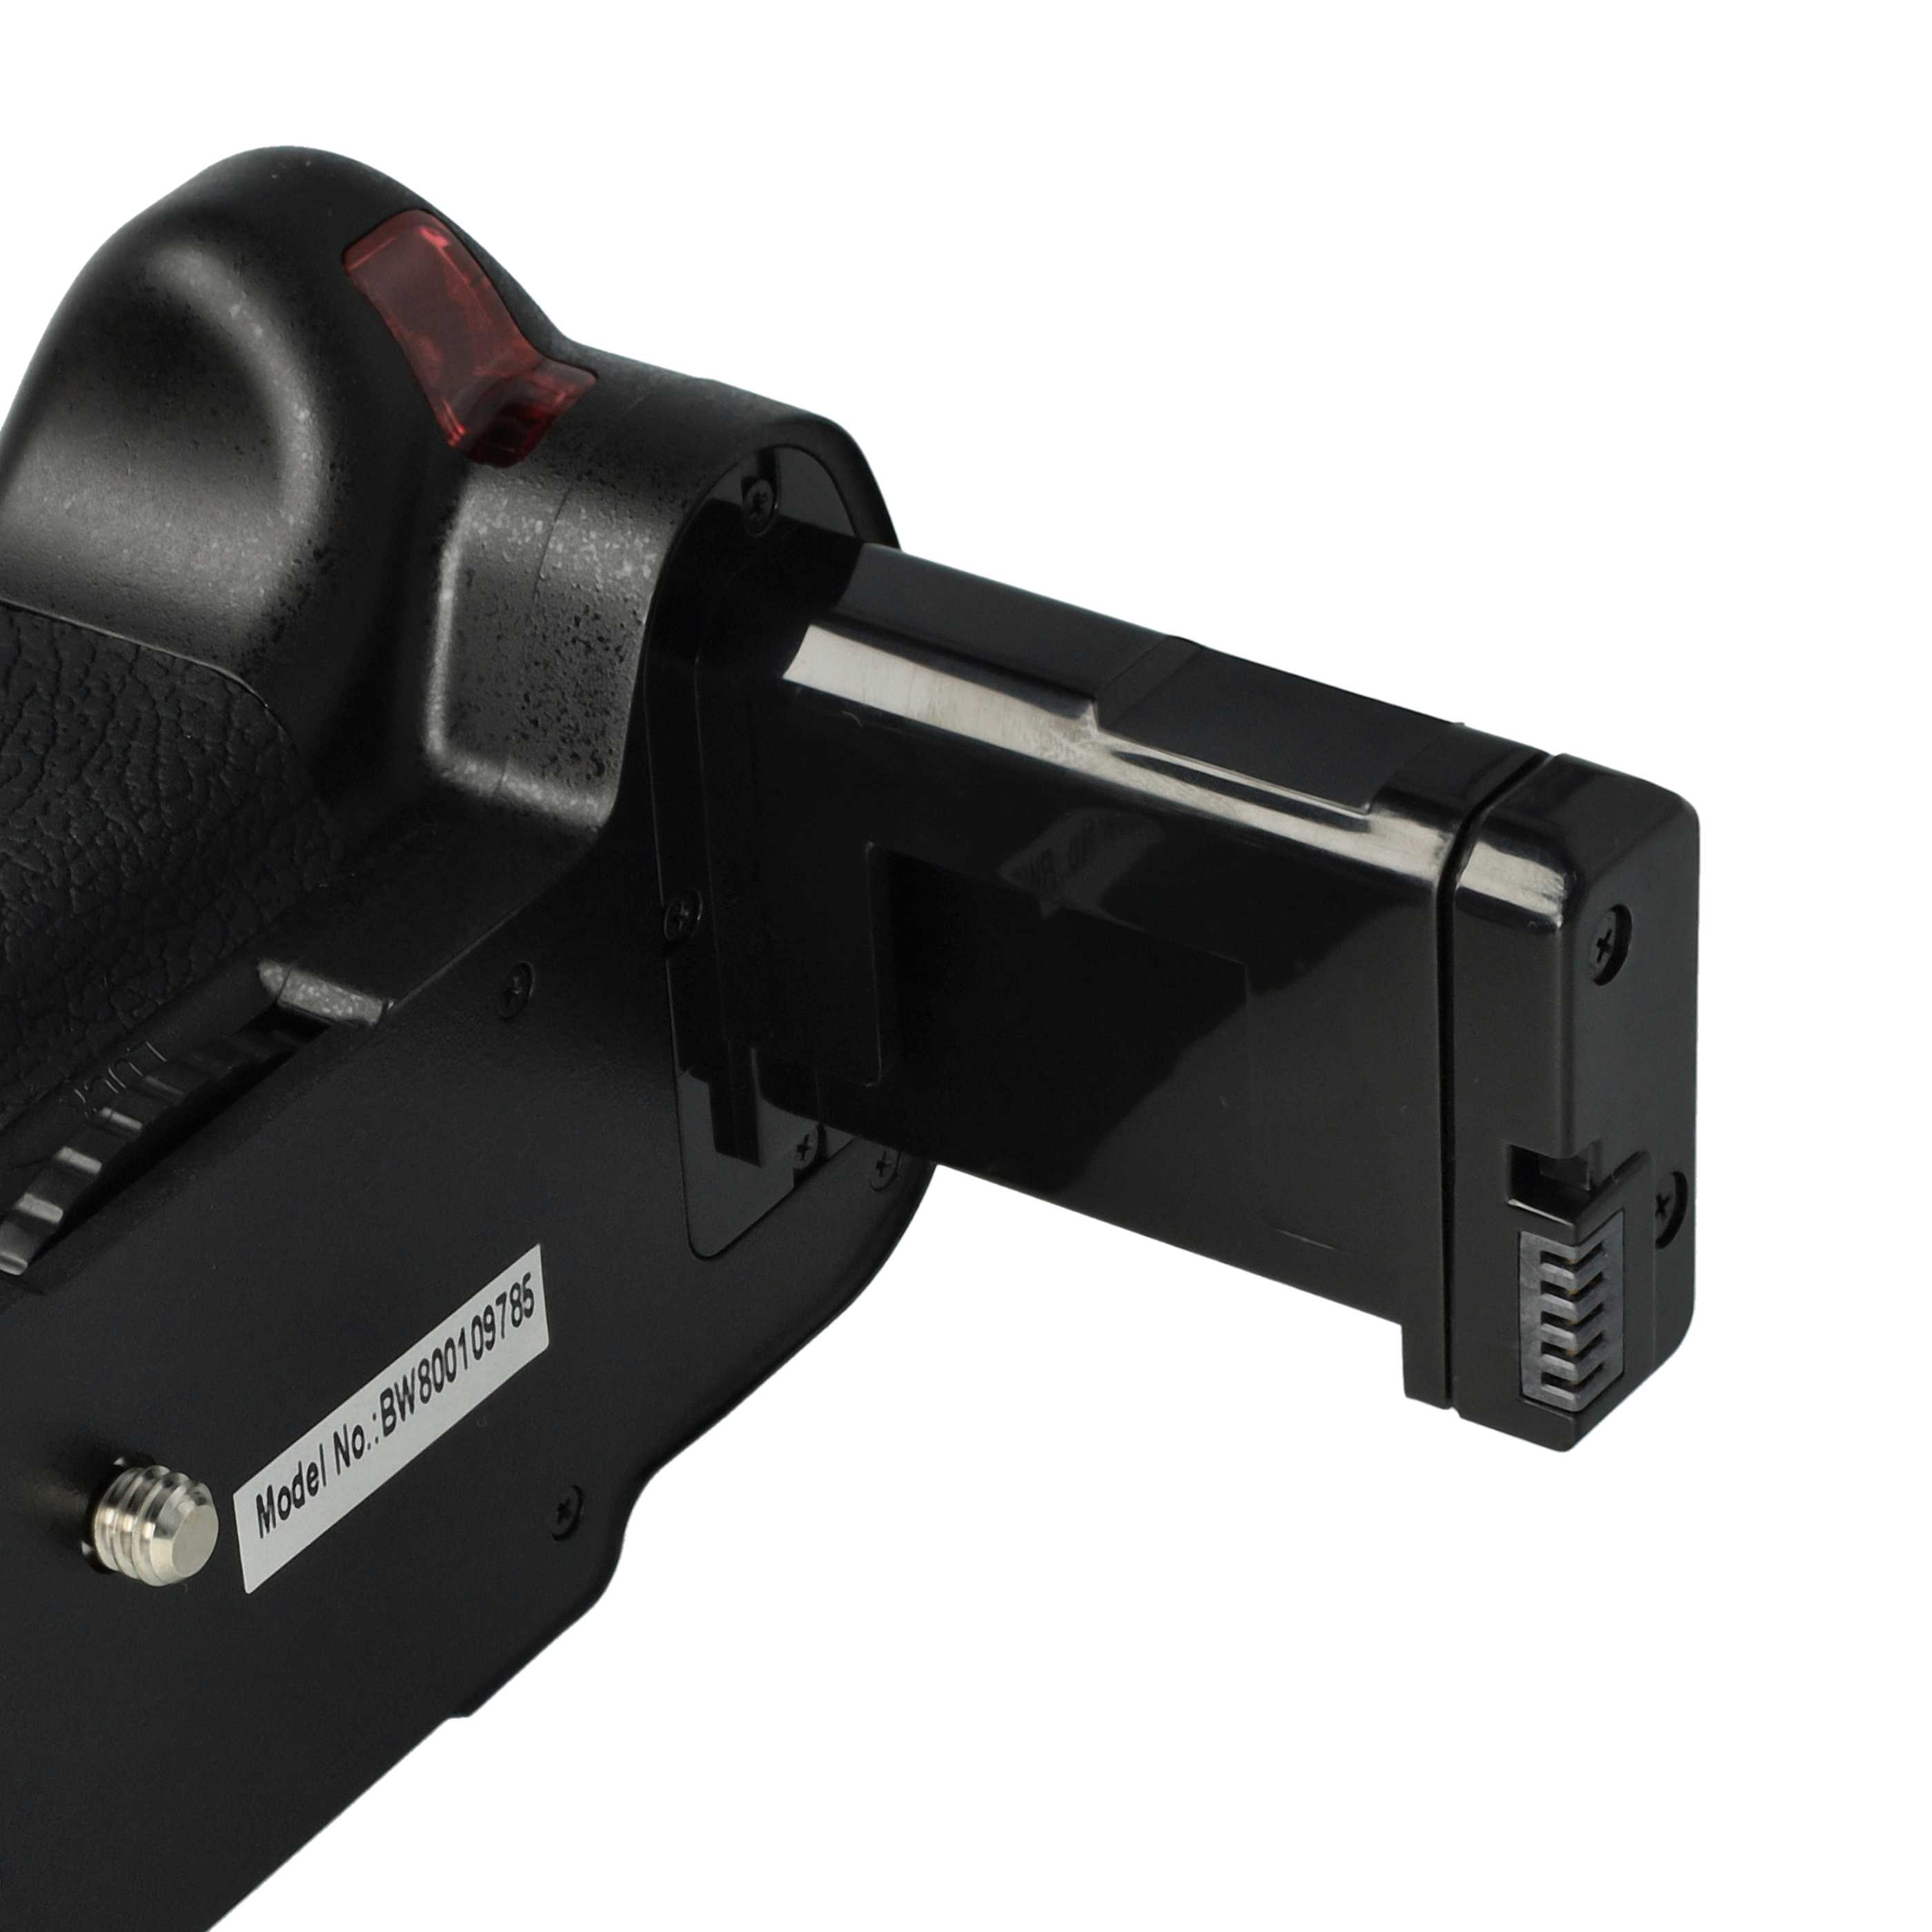 Empuñadura de batería para camara Nikon D5100, D5200, D5300 - incl. rueda selectora, incl. disparador